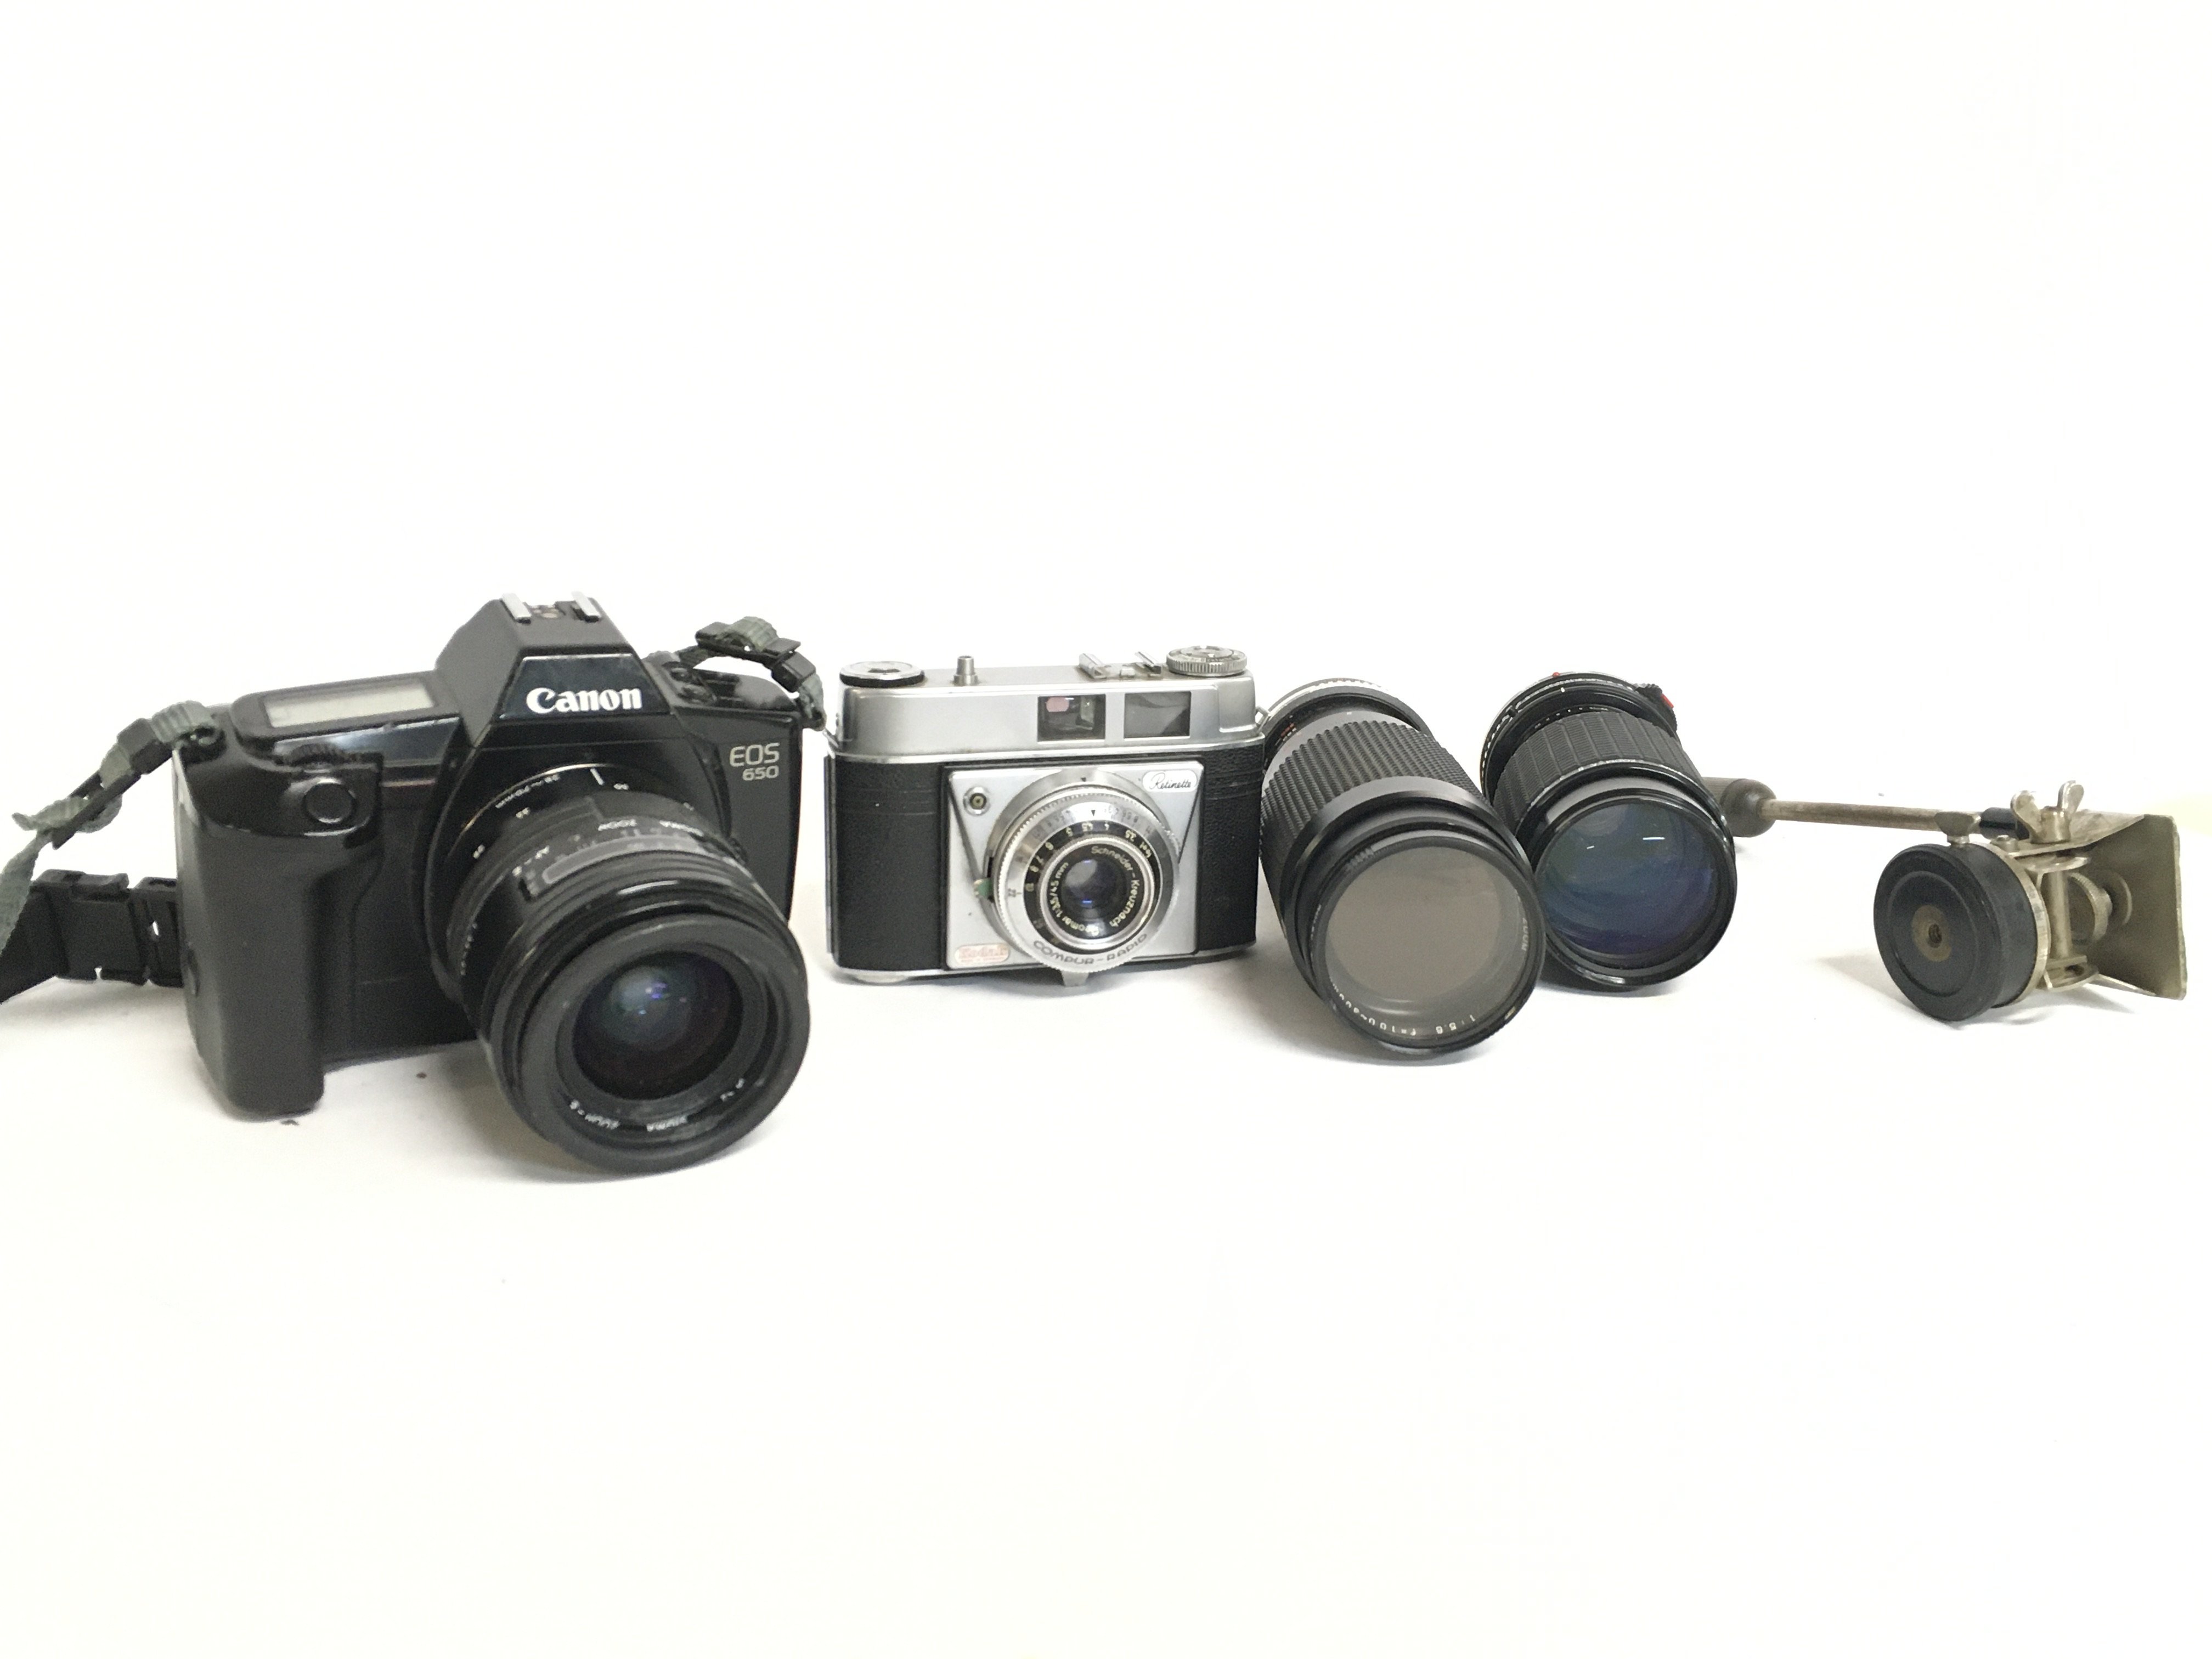 A collection of vintage cameras including a Canon